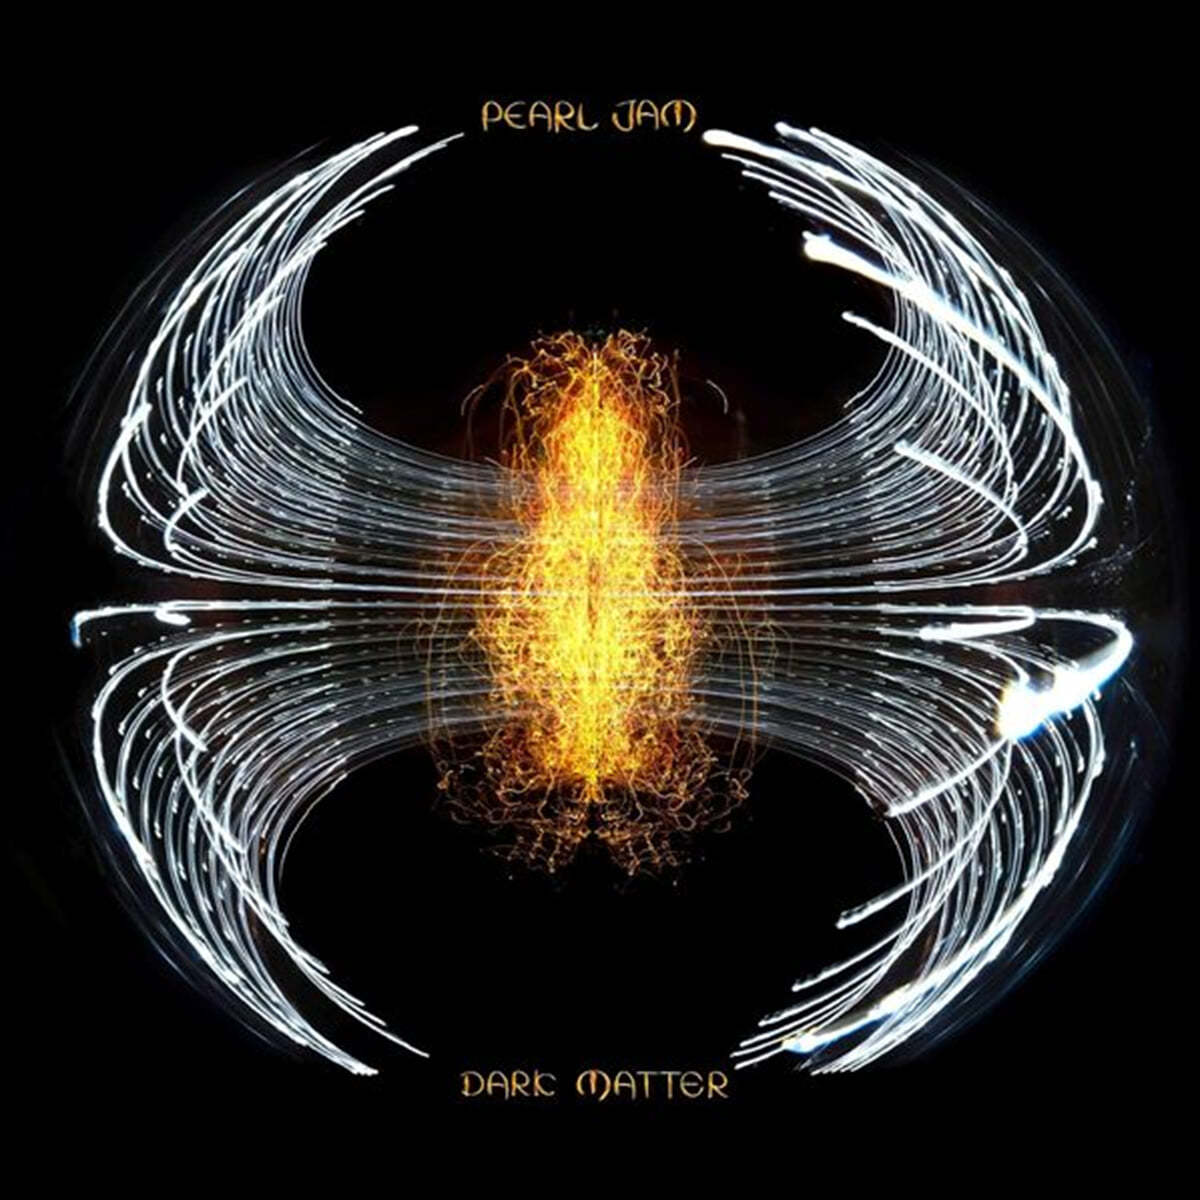 Pearl Jam (펄 잼) - Dark Matter 